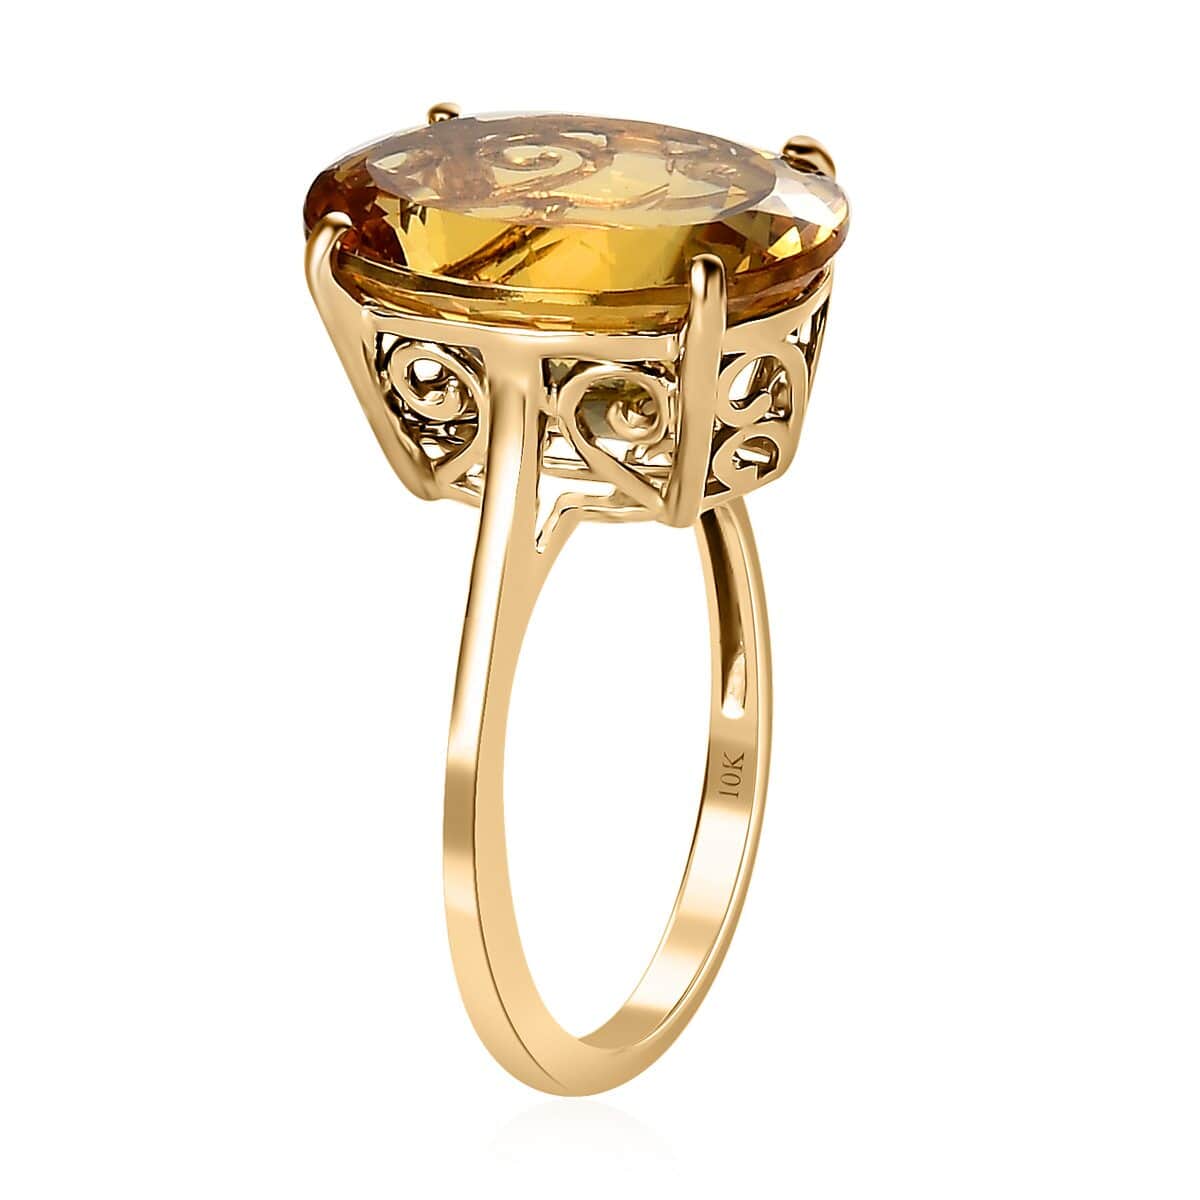 LUXORO 10K Yellow Gold Premium Brazilian Golden Apatite Solitaire Ring (Size 5.0) 2.30 Grams 11.10 ctw image number 3